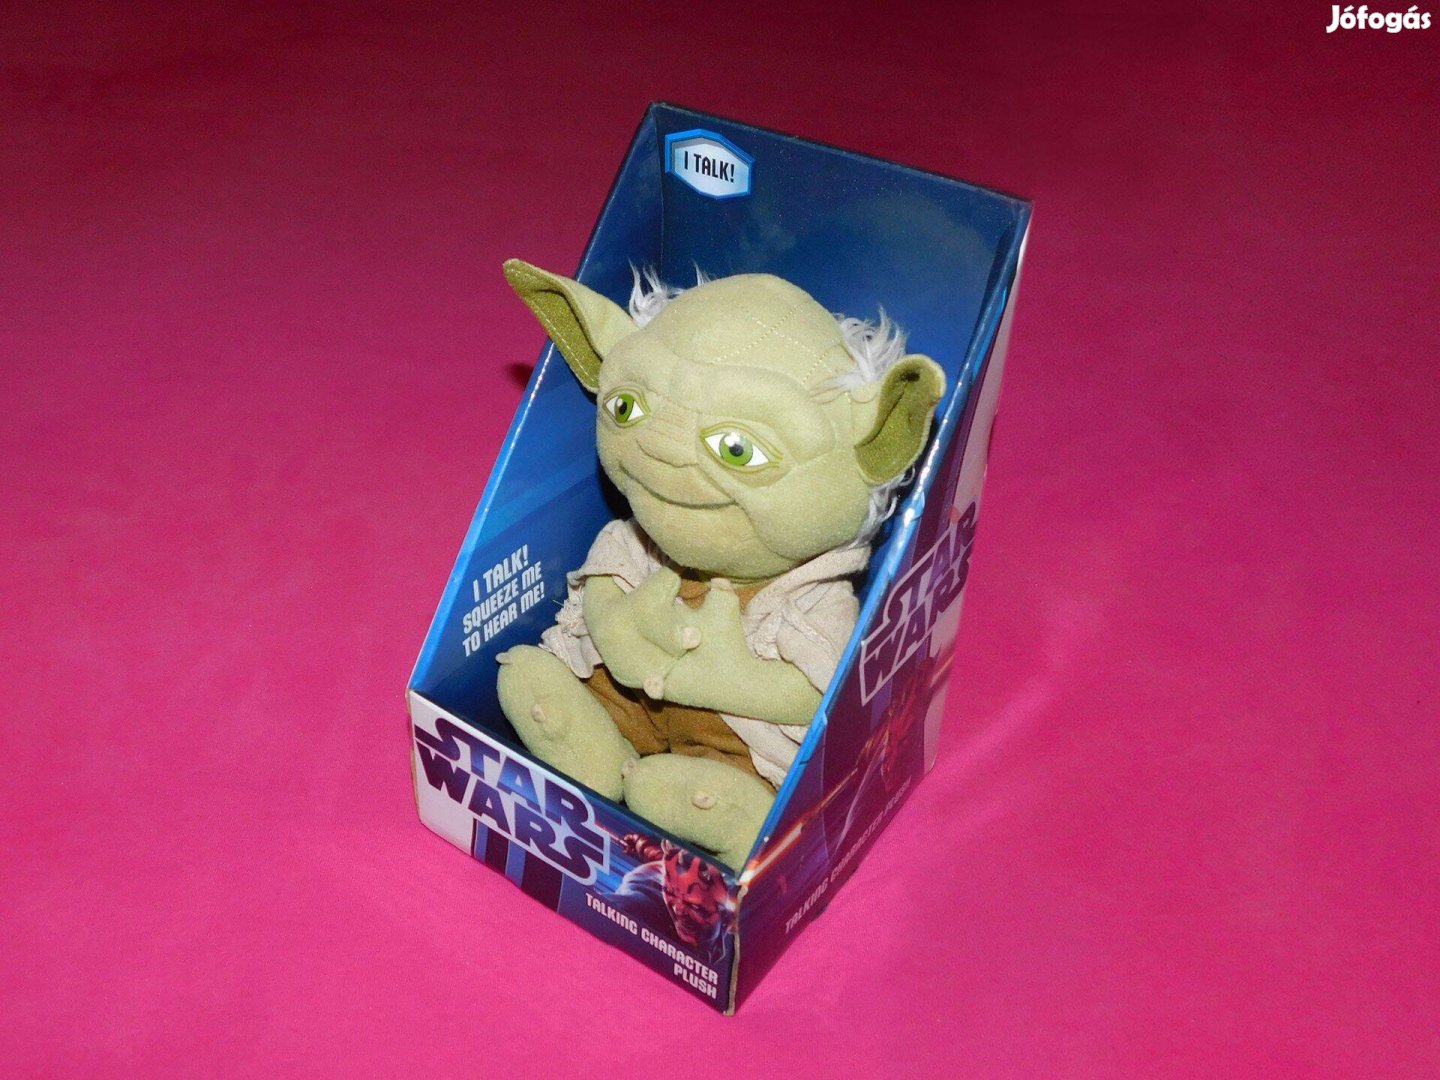 Star Wars Yoda beszélő plüss figura, 24 cm